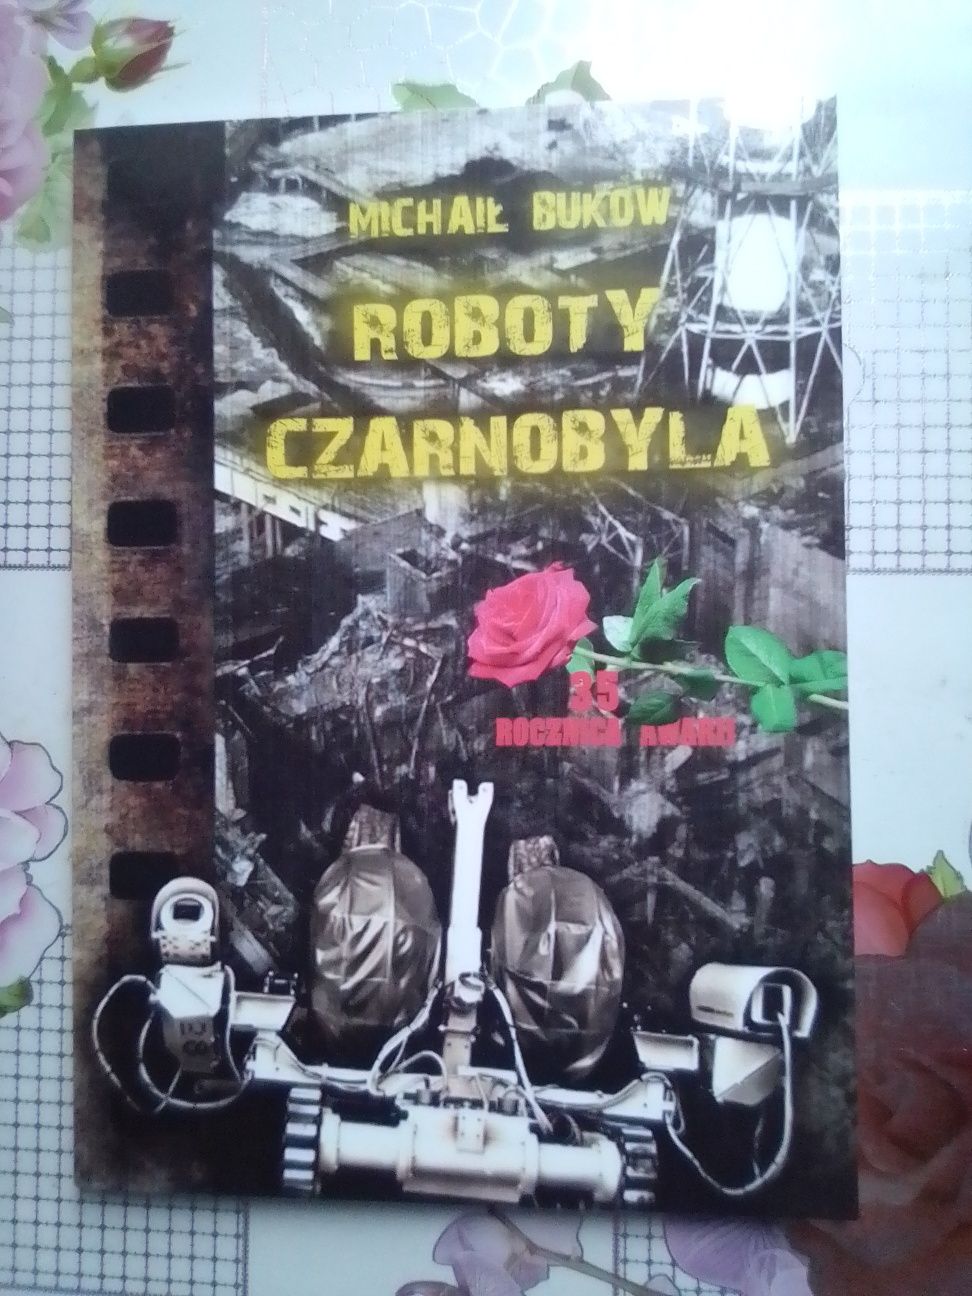 "Roboty czarnobyla", издано в Кракове.